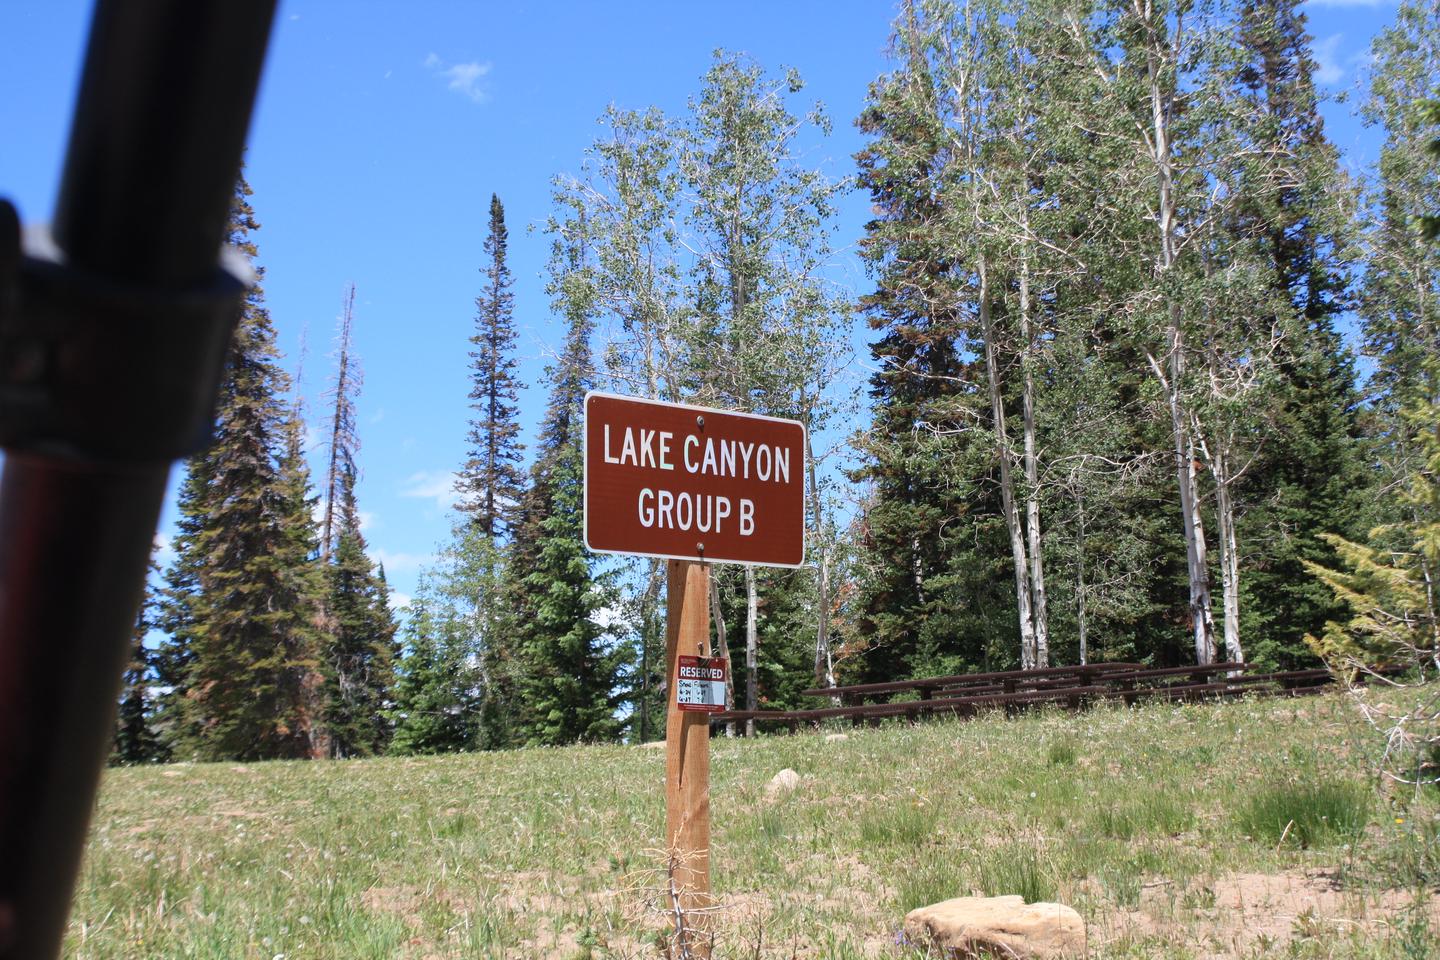 Lake Canyon Campground - Lake Canyon Group Site  B Lake Canyon Campground - Lake Canyon Group Site B 